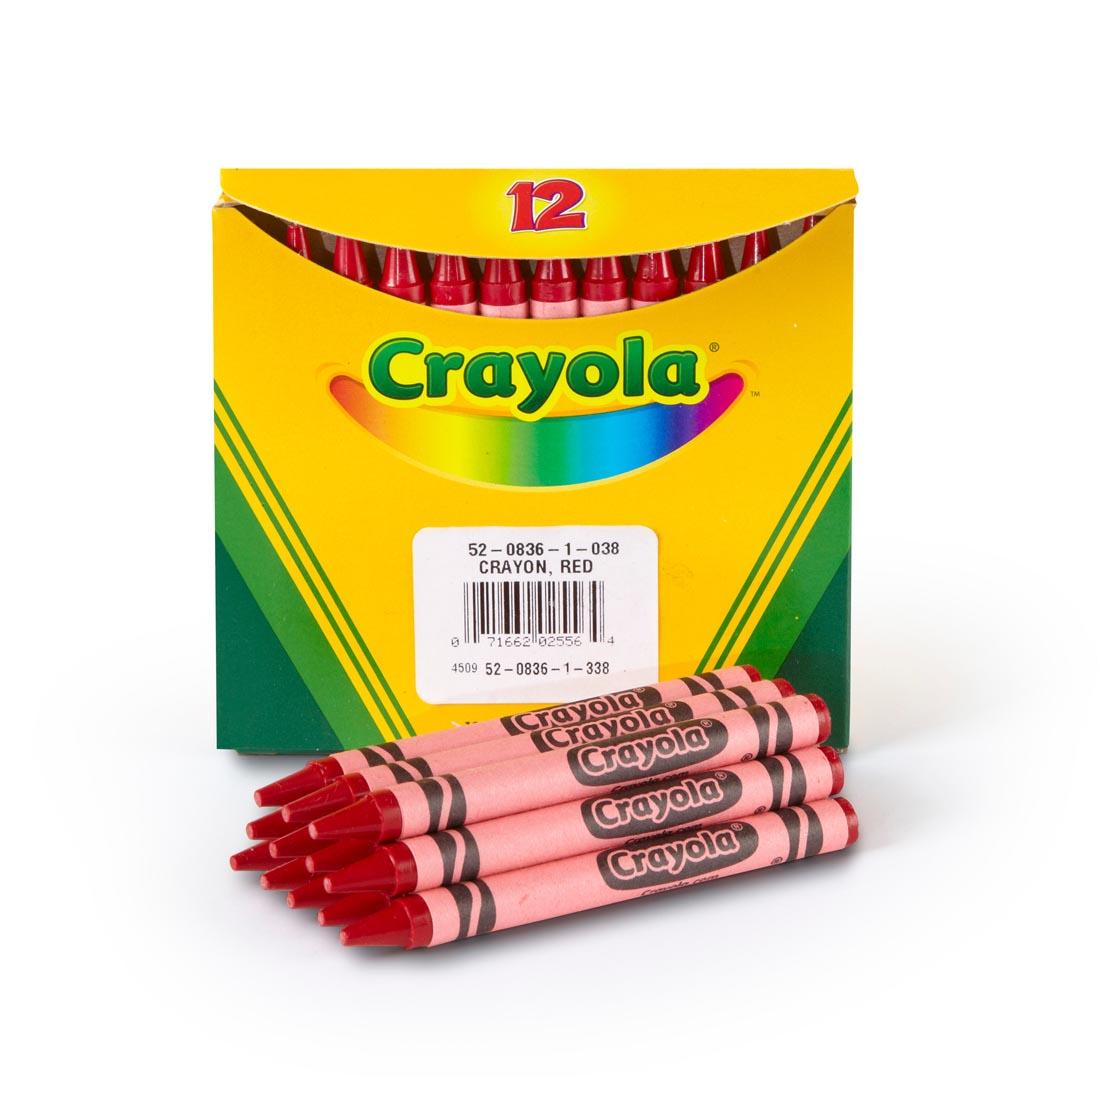 Box of Crayola Regular Crayon Refills with 12 Red Crayons